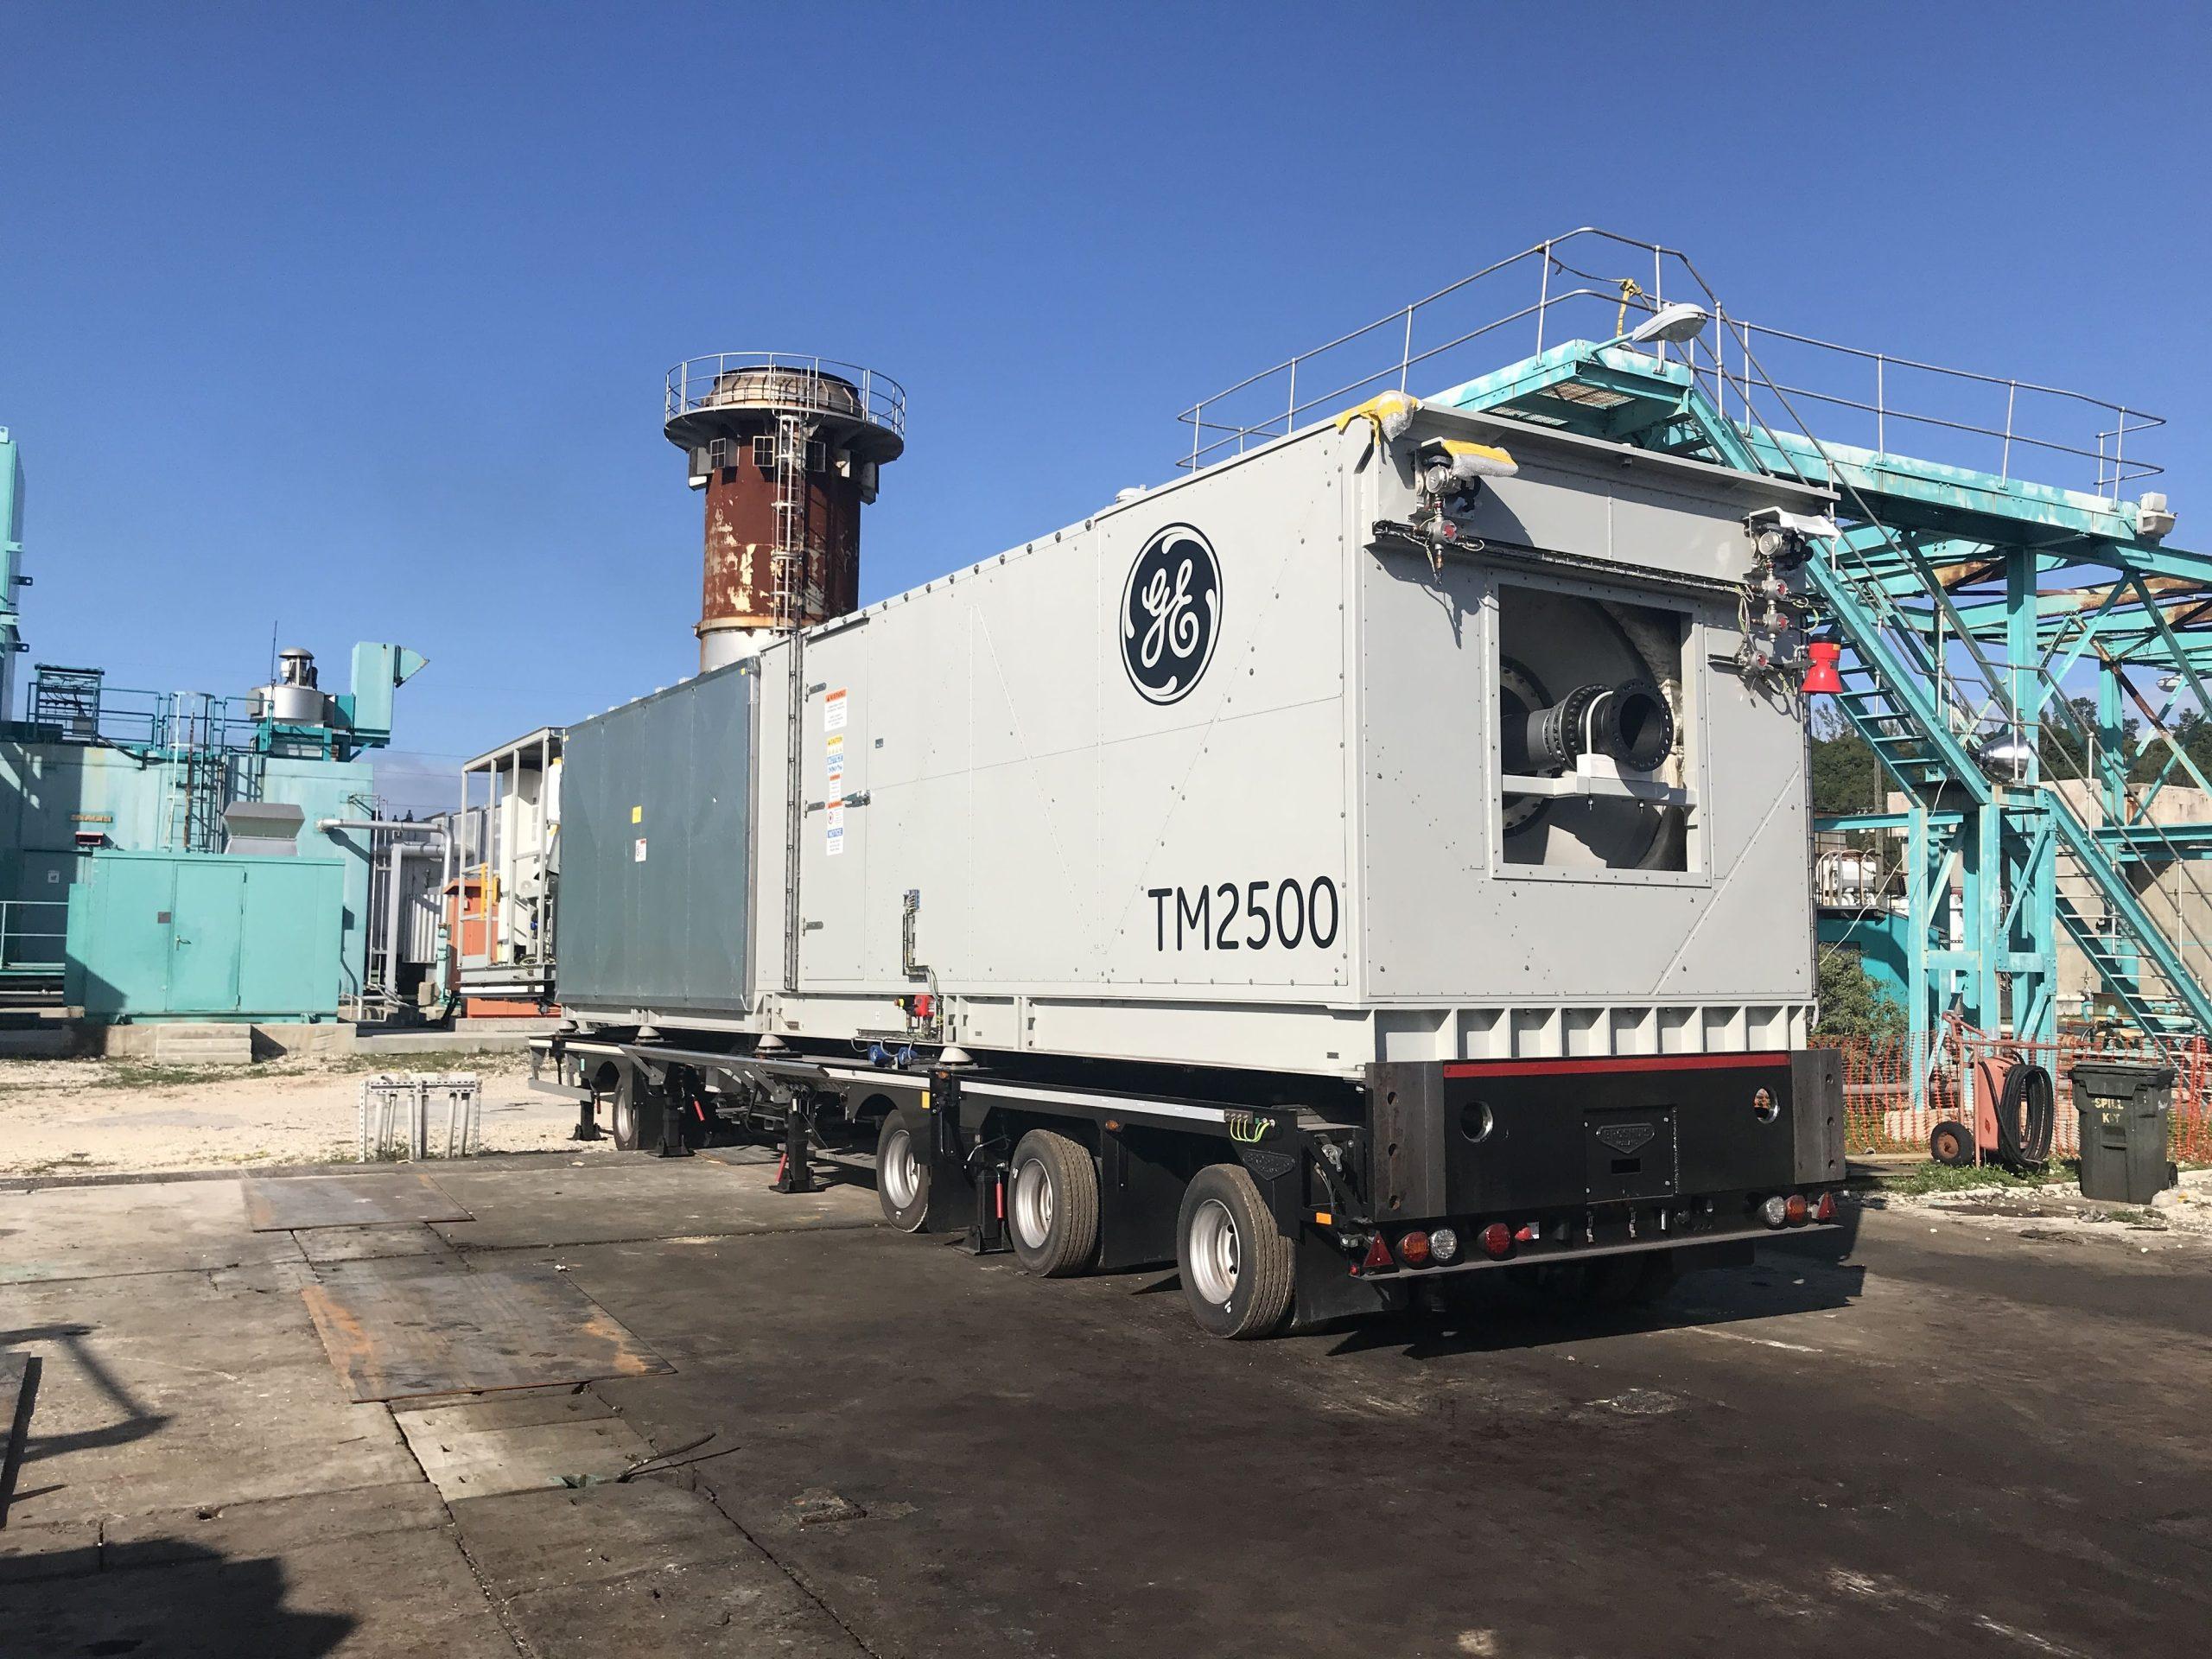 USAID donates mobile gas turbine power plant to Ukraine to meet electricity needs